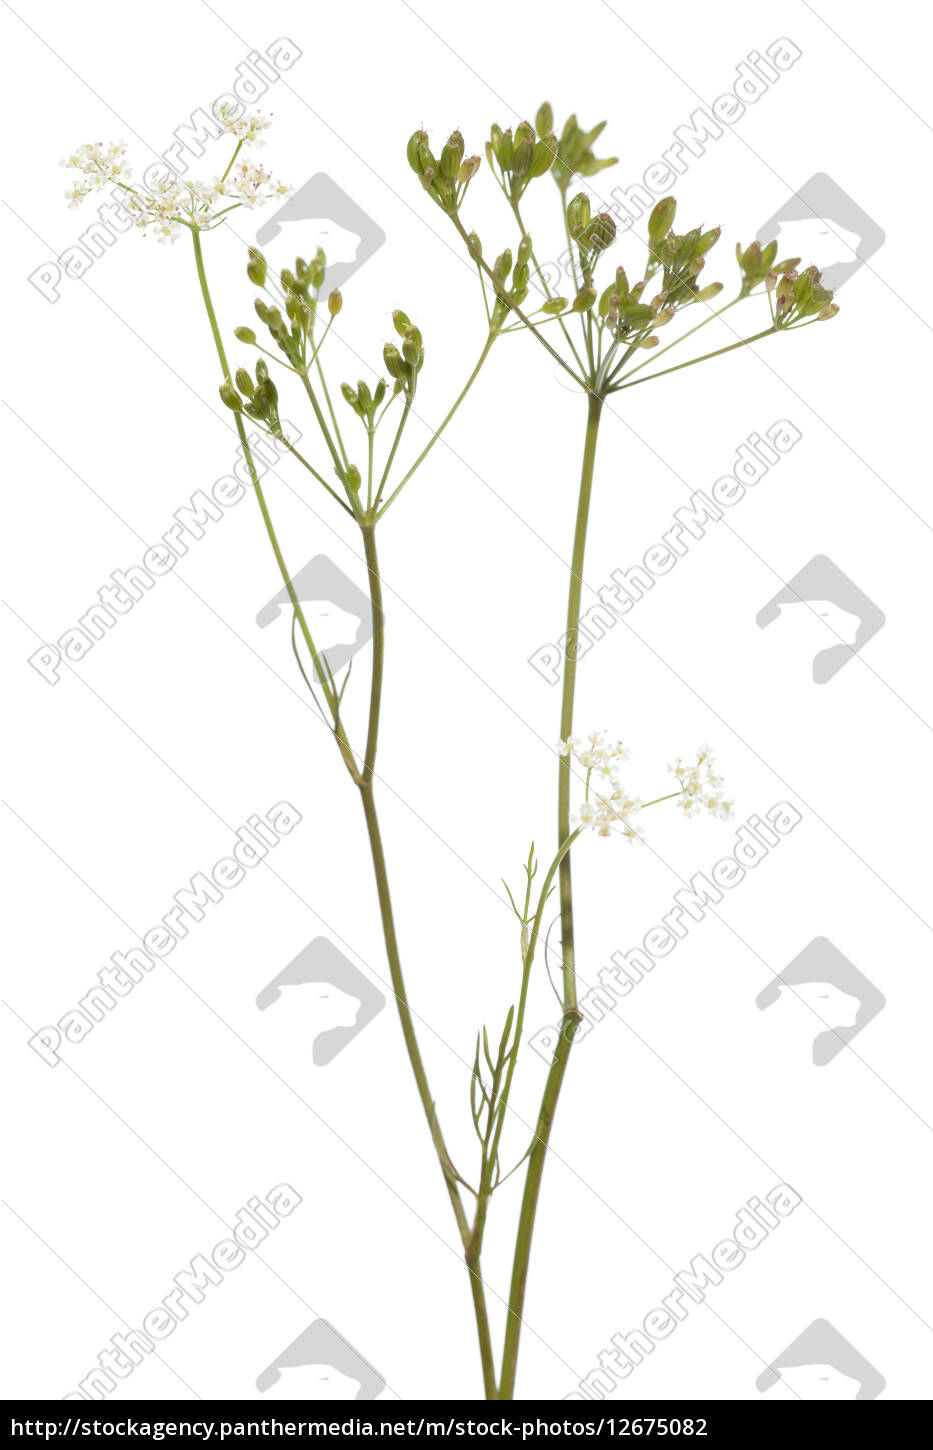 pflanze kümmel - Stock Photo - #12675082 | Bildagentur PantherMedia